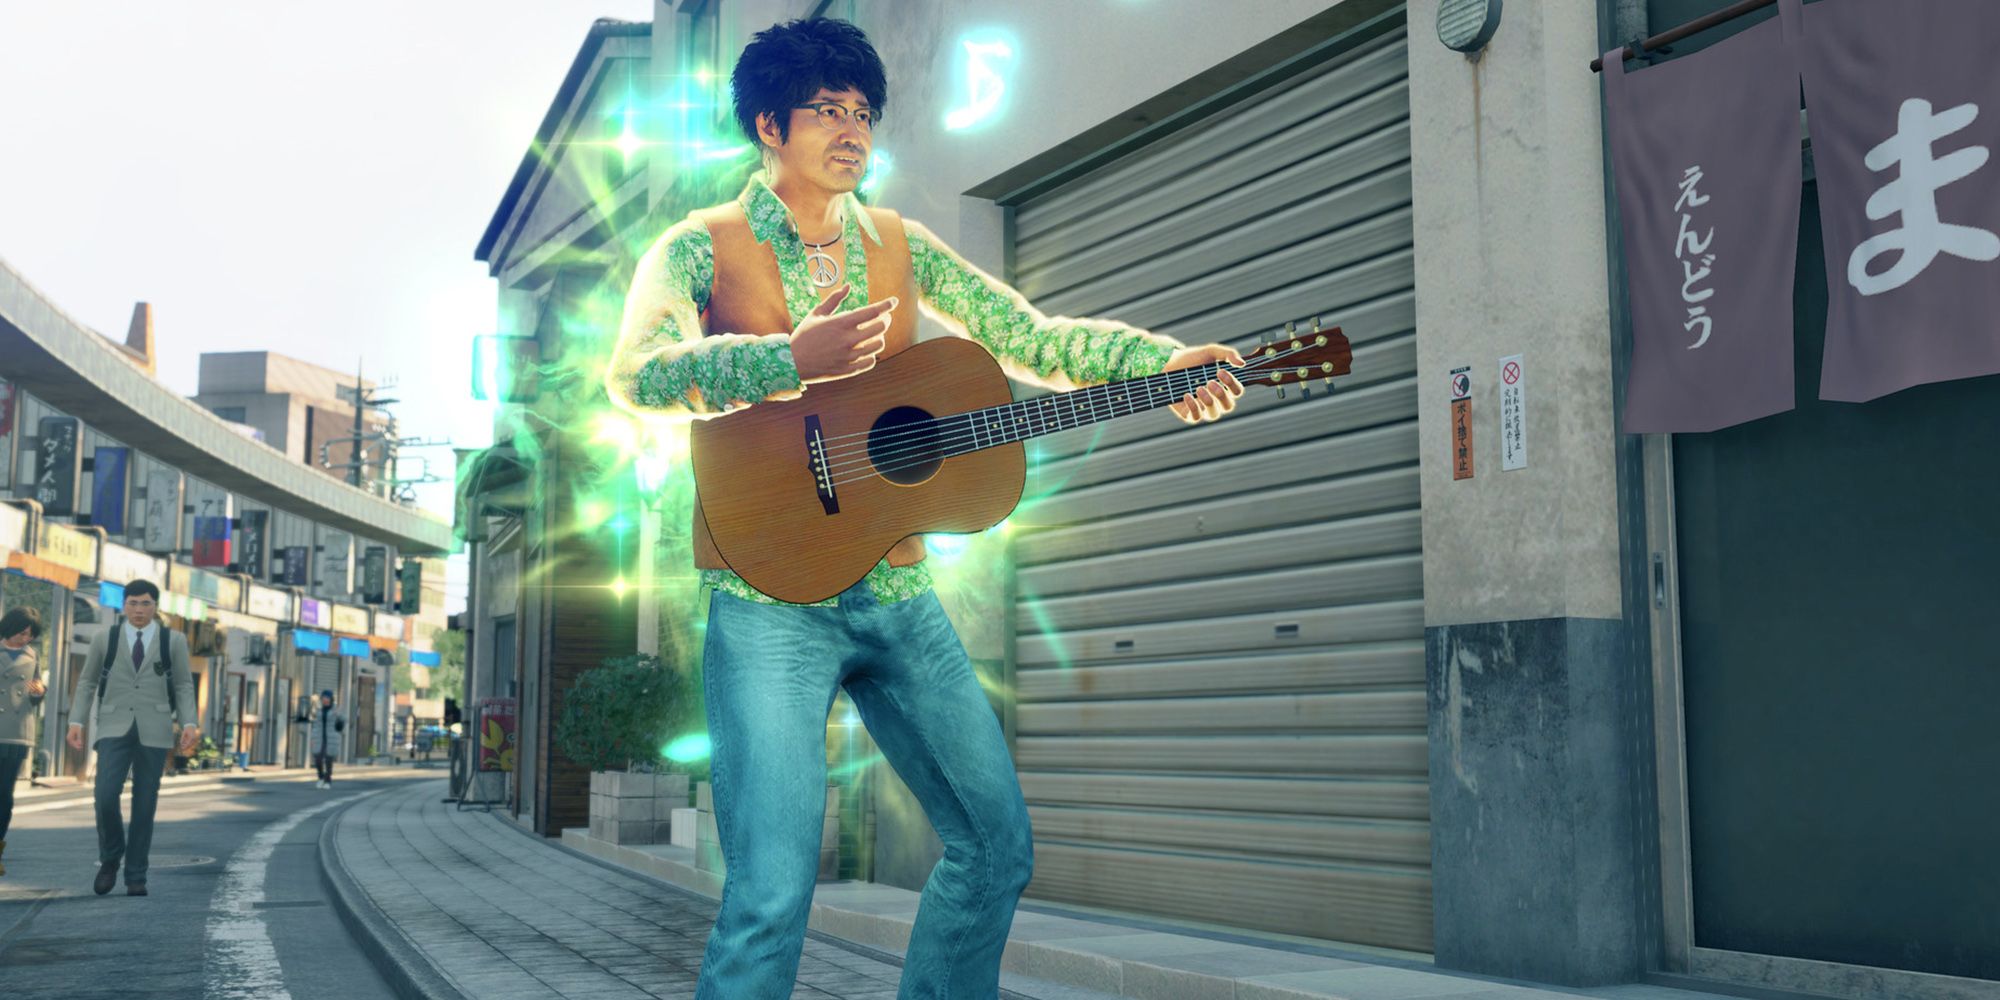 Yakuze Like A Dragon - Nanba Playing The Guitar As The Musician Job To Heal People